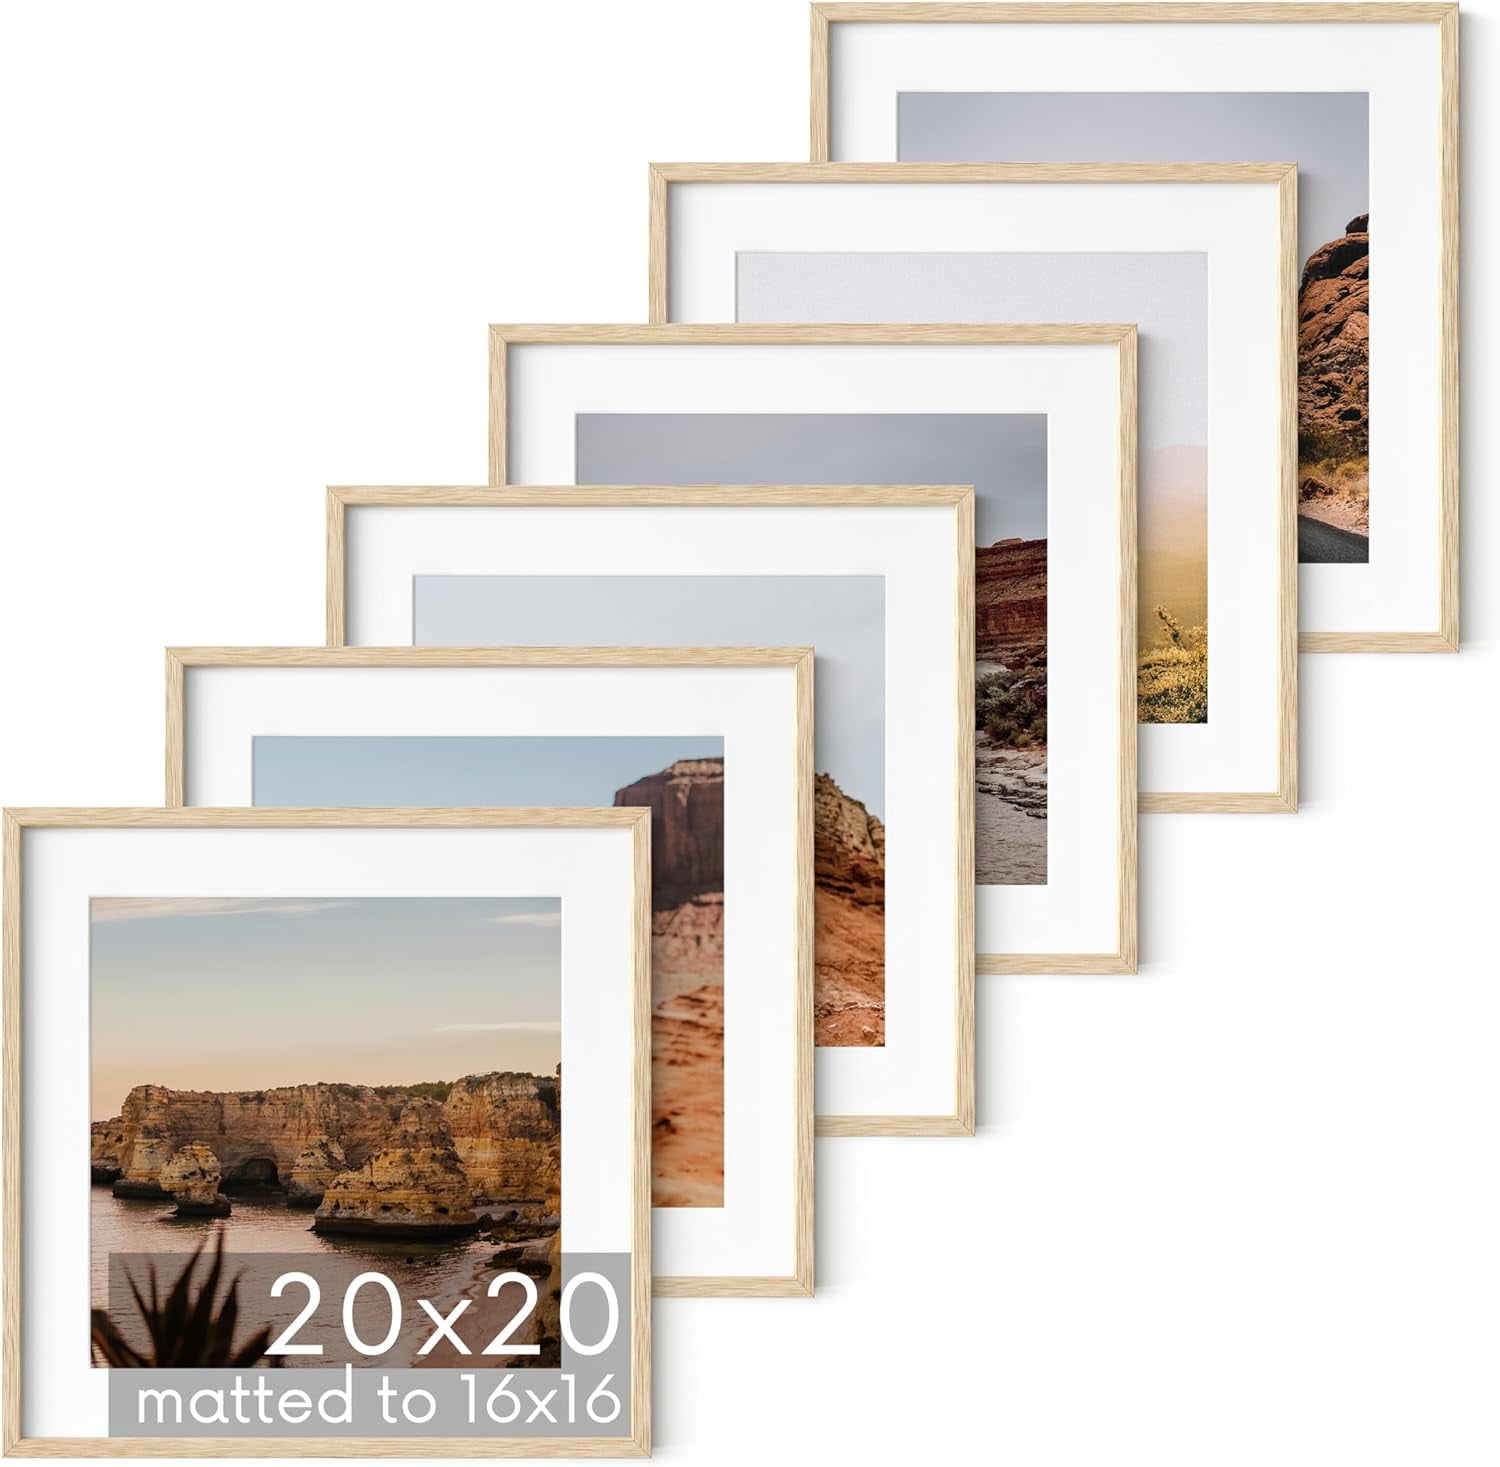 Profile 20x20 Pewter Frames - Frame Wall Ideas - Room & Board